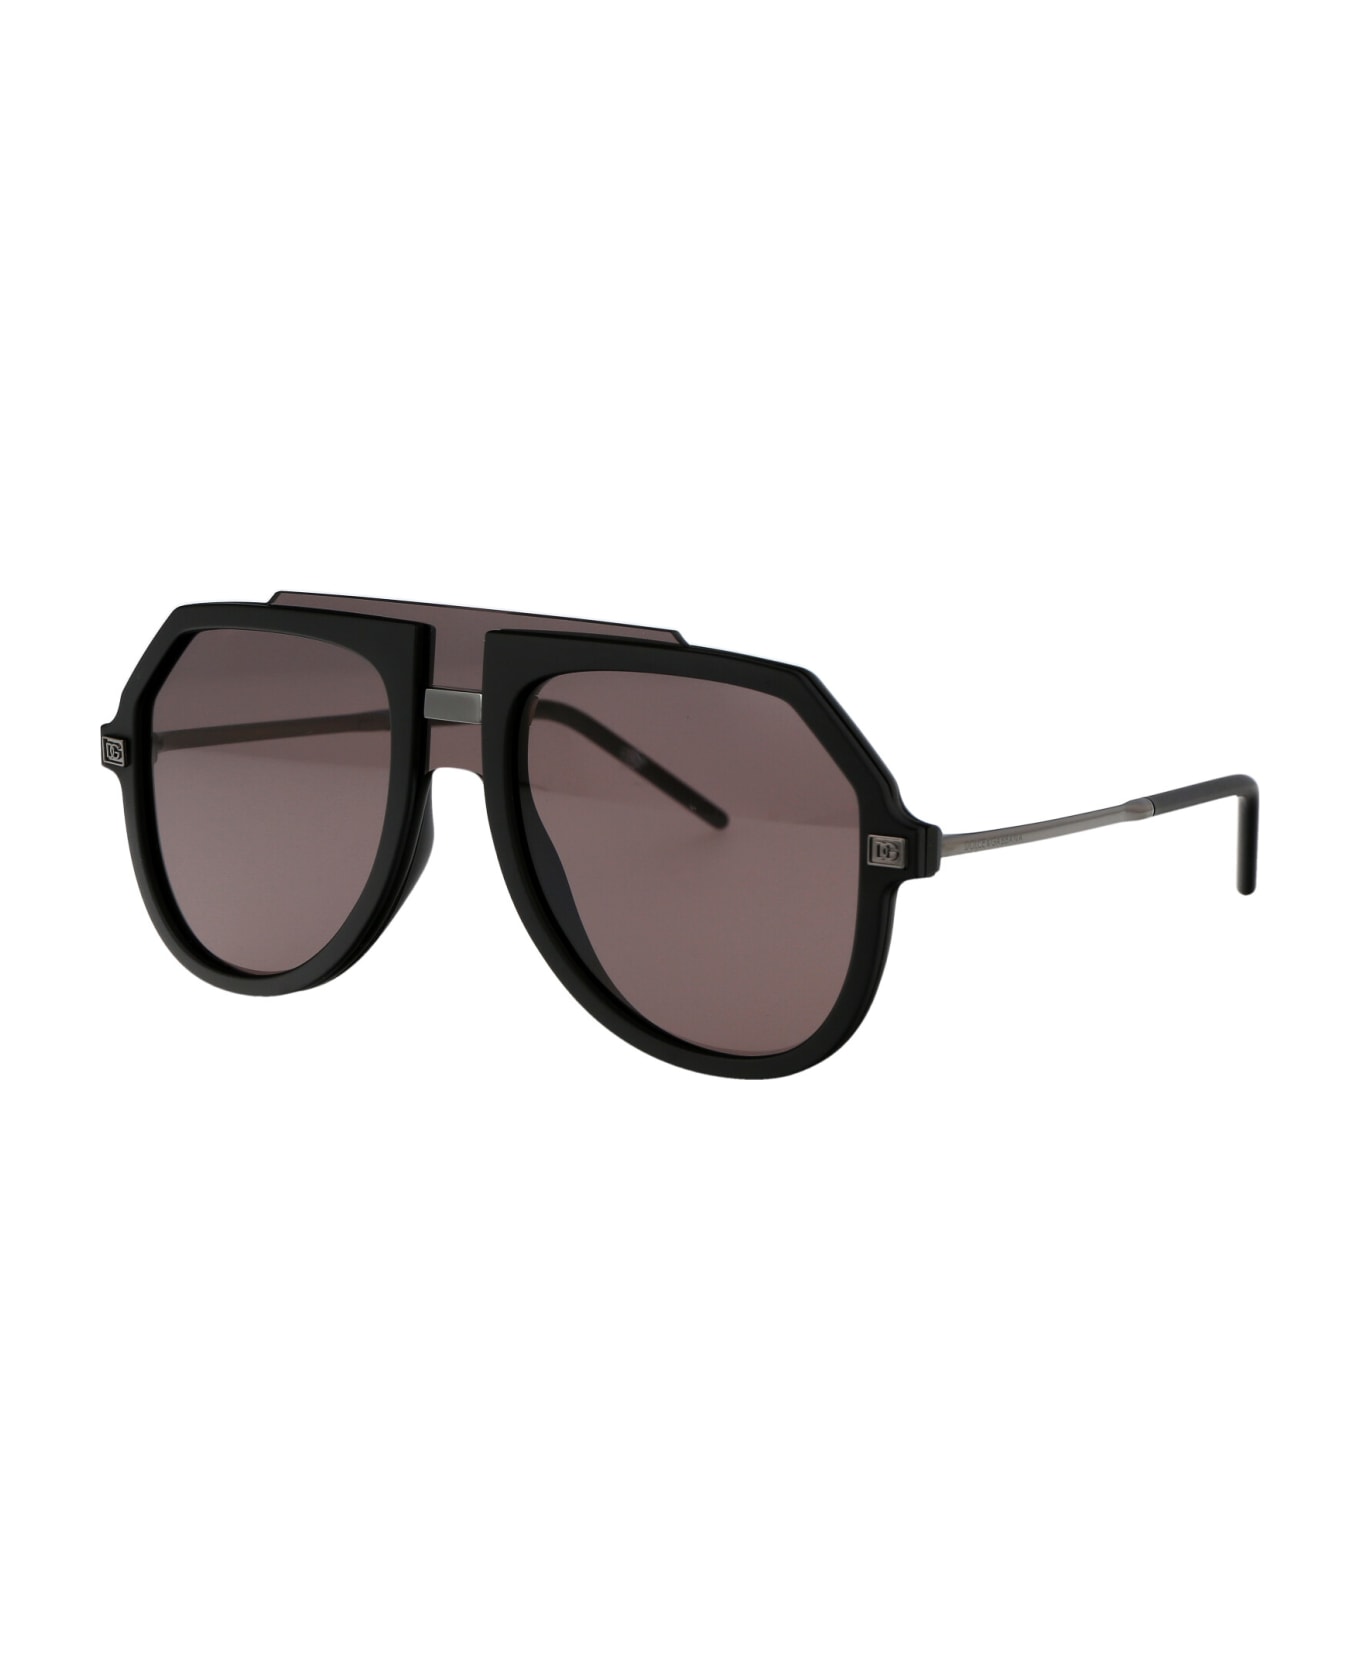 Dolce & Gabbana Eyewear 0dg6195 Sunglasses - 25257N Matte Black サングラス